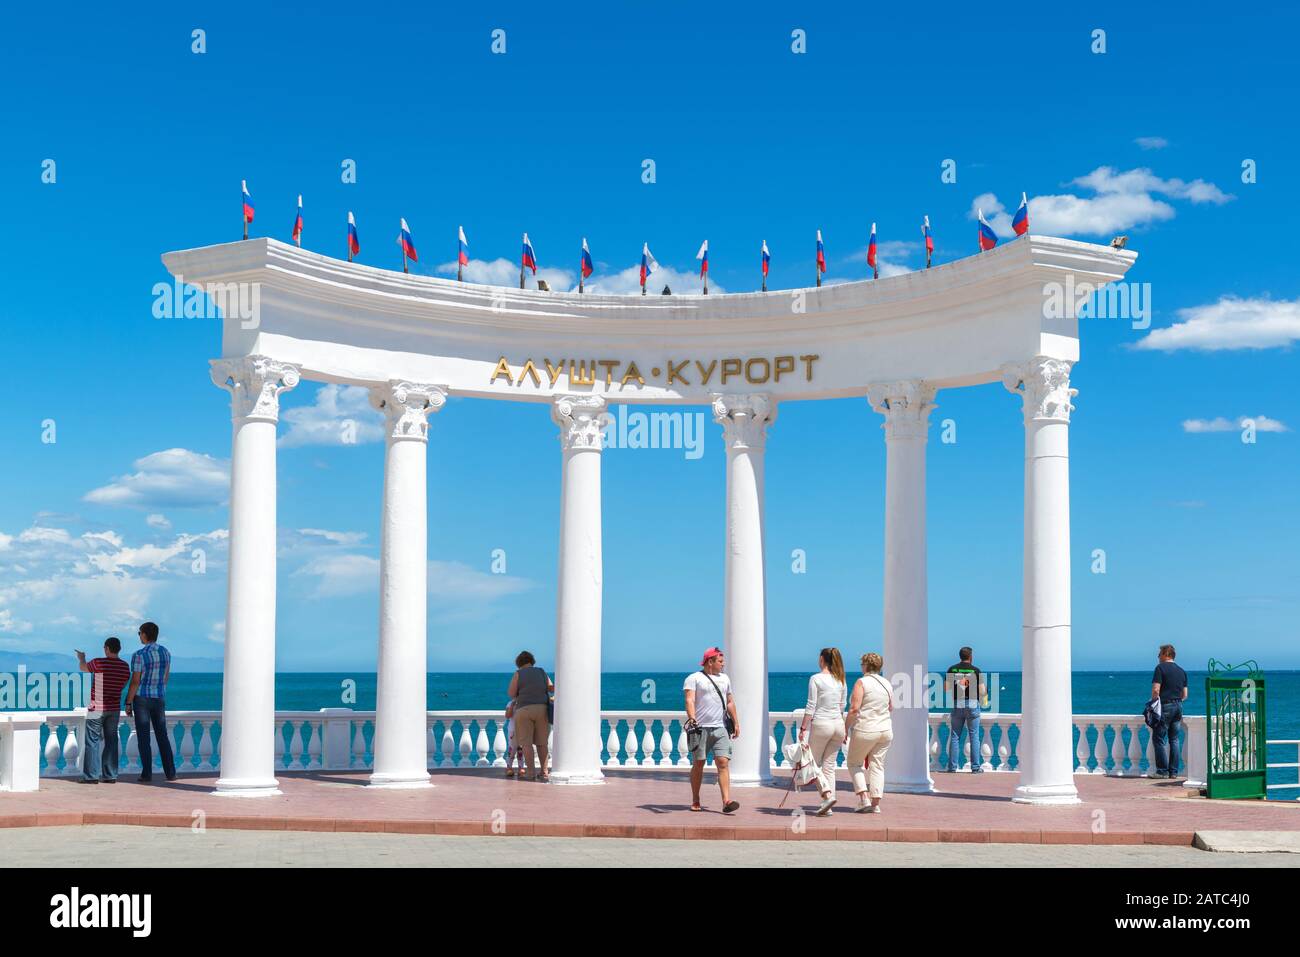 ALUSHTA, CRIMEA - MAY 15, 2016: People visit the rotunda 'Alushta resort' on the beach in Crimea, Russia. Scenic view of the Black Sea waterfront of C Stock Photo